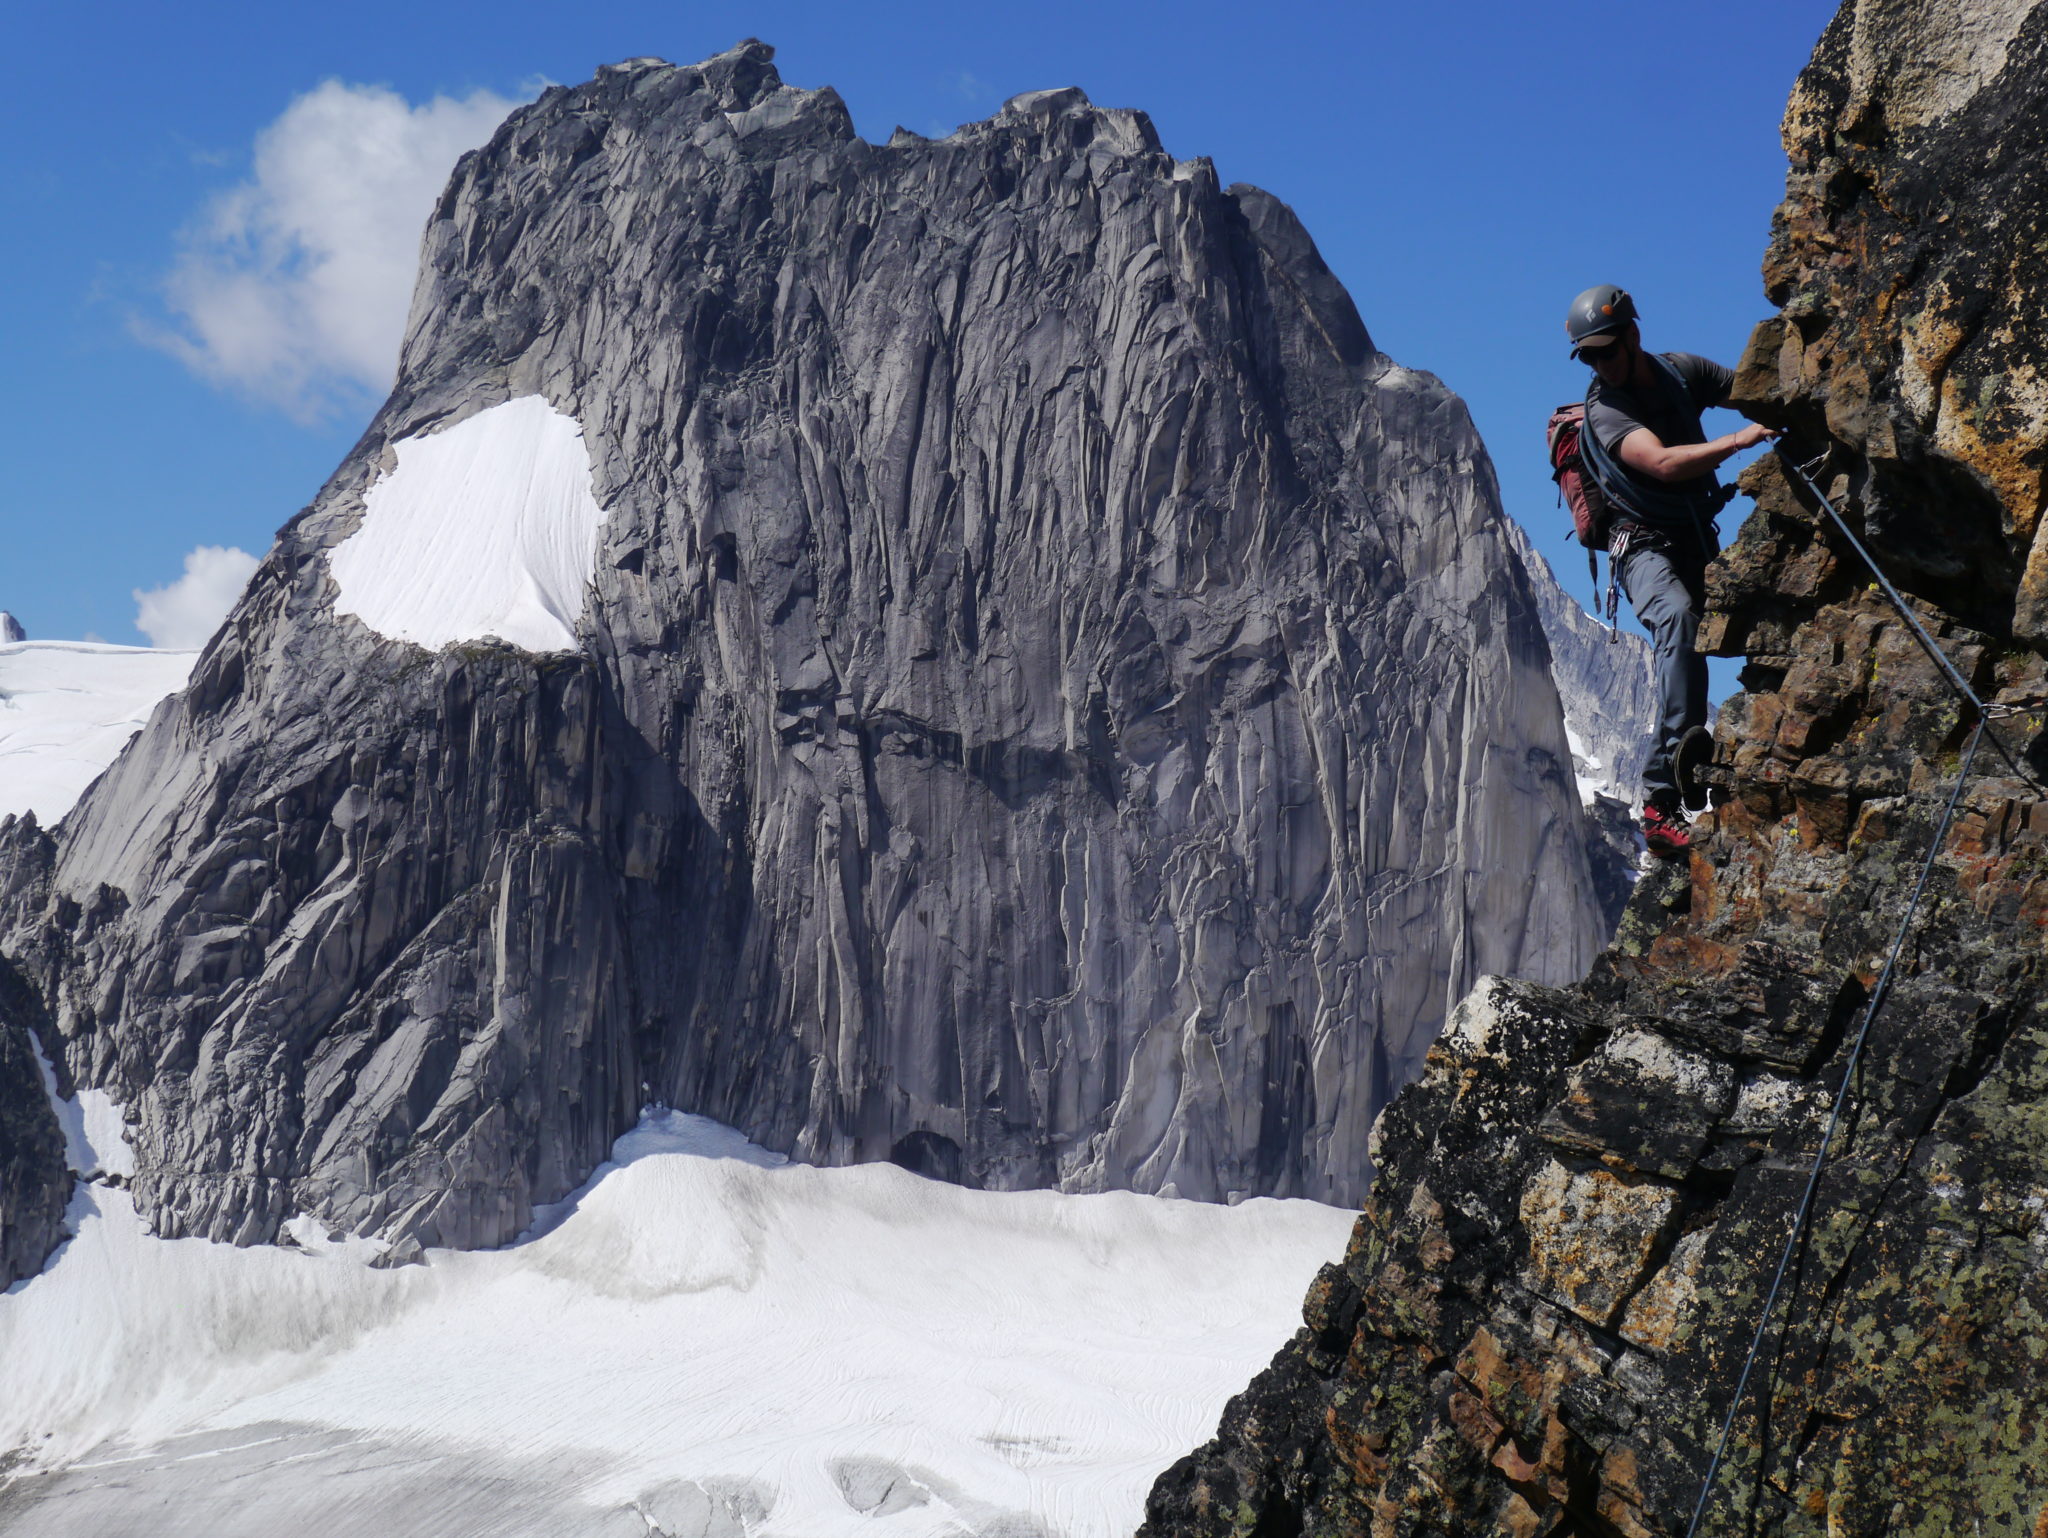 Alpine Rock - Altus Mountain Guides